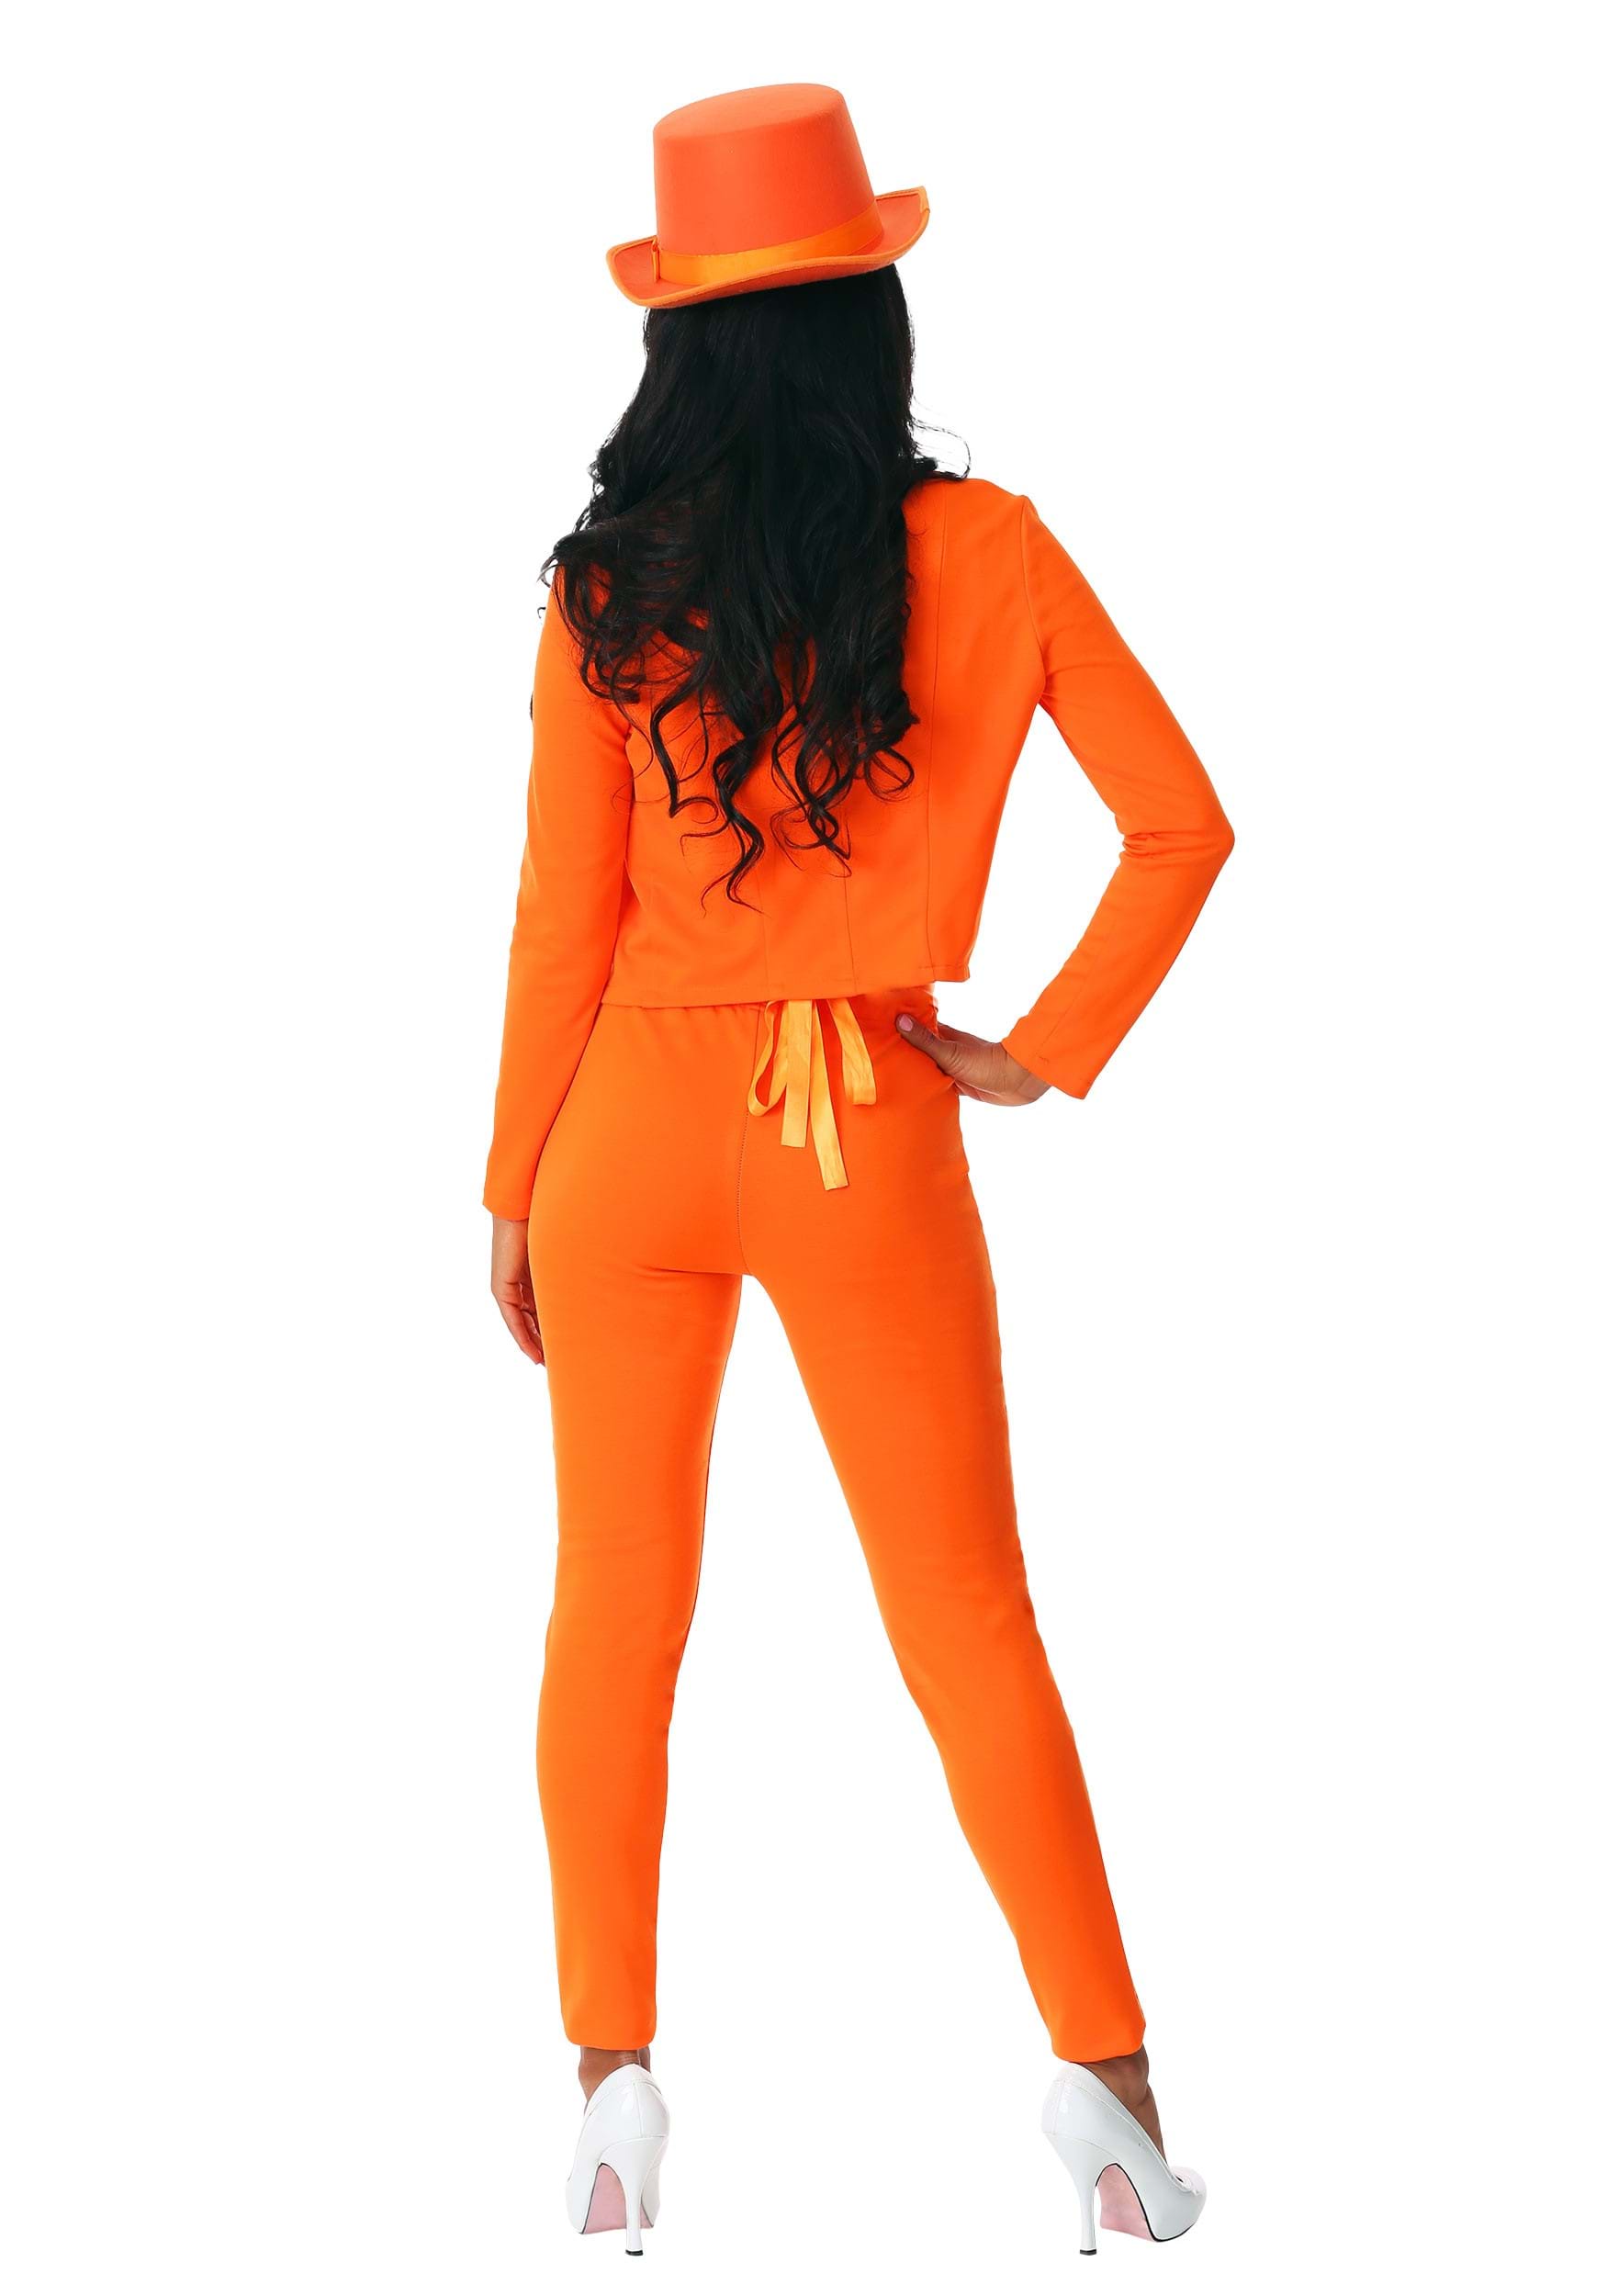 Adult Female Orange Tuxedo Costume